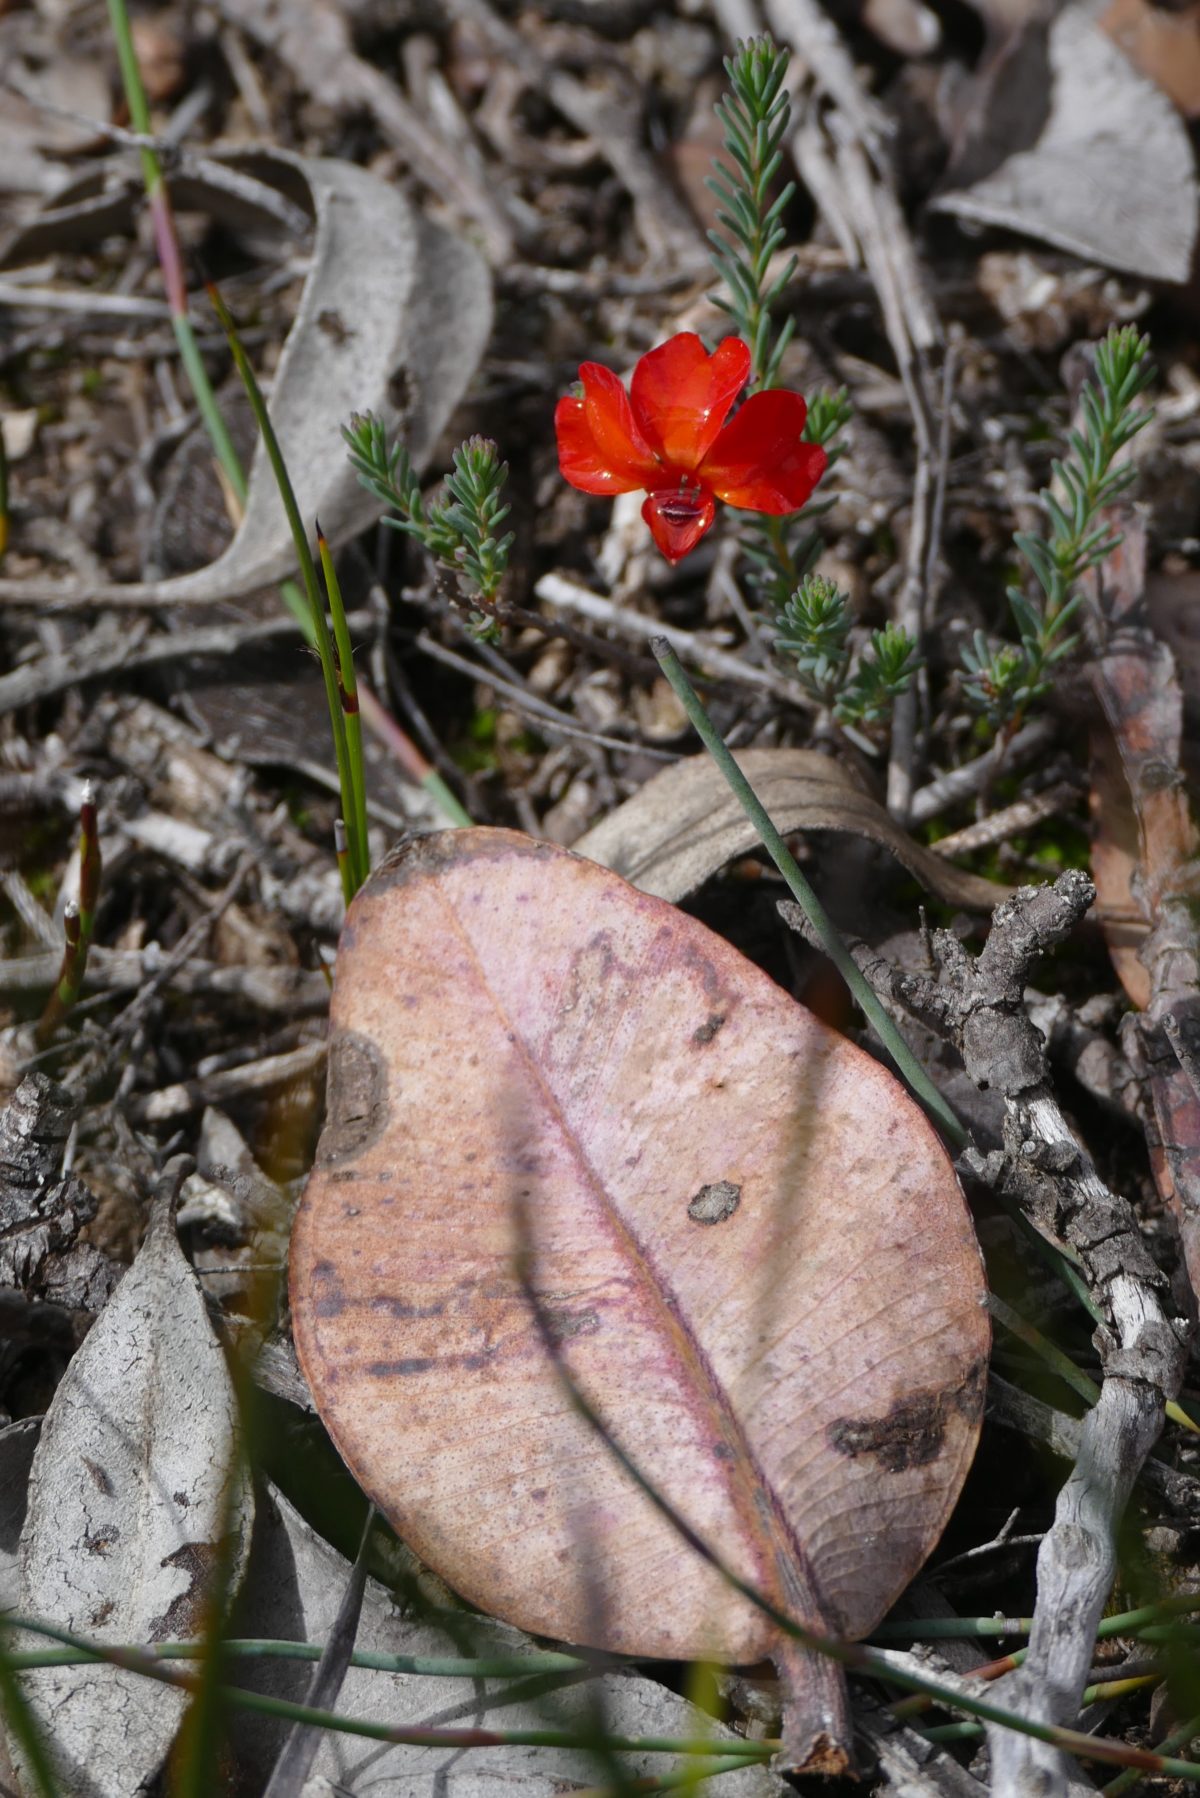 Red Leschenaultia and eucalypt leaves. All photos copyright Doug Spencer.